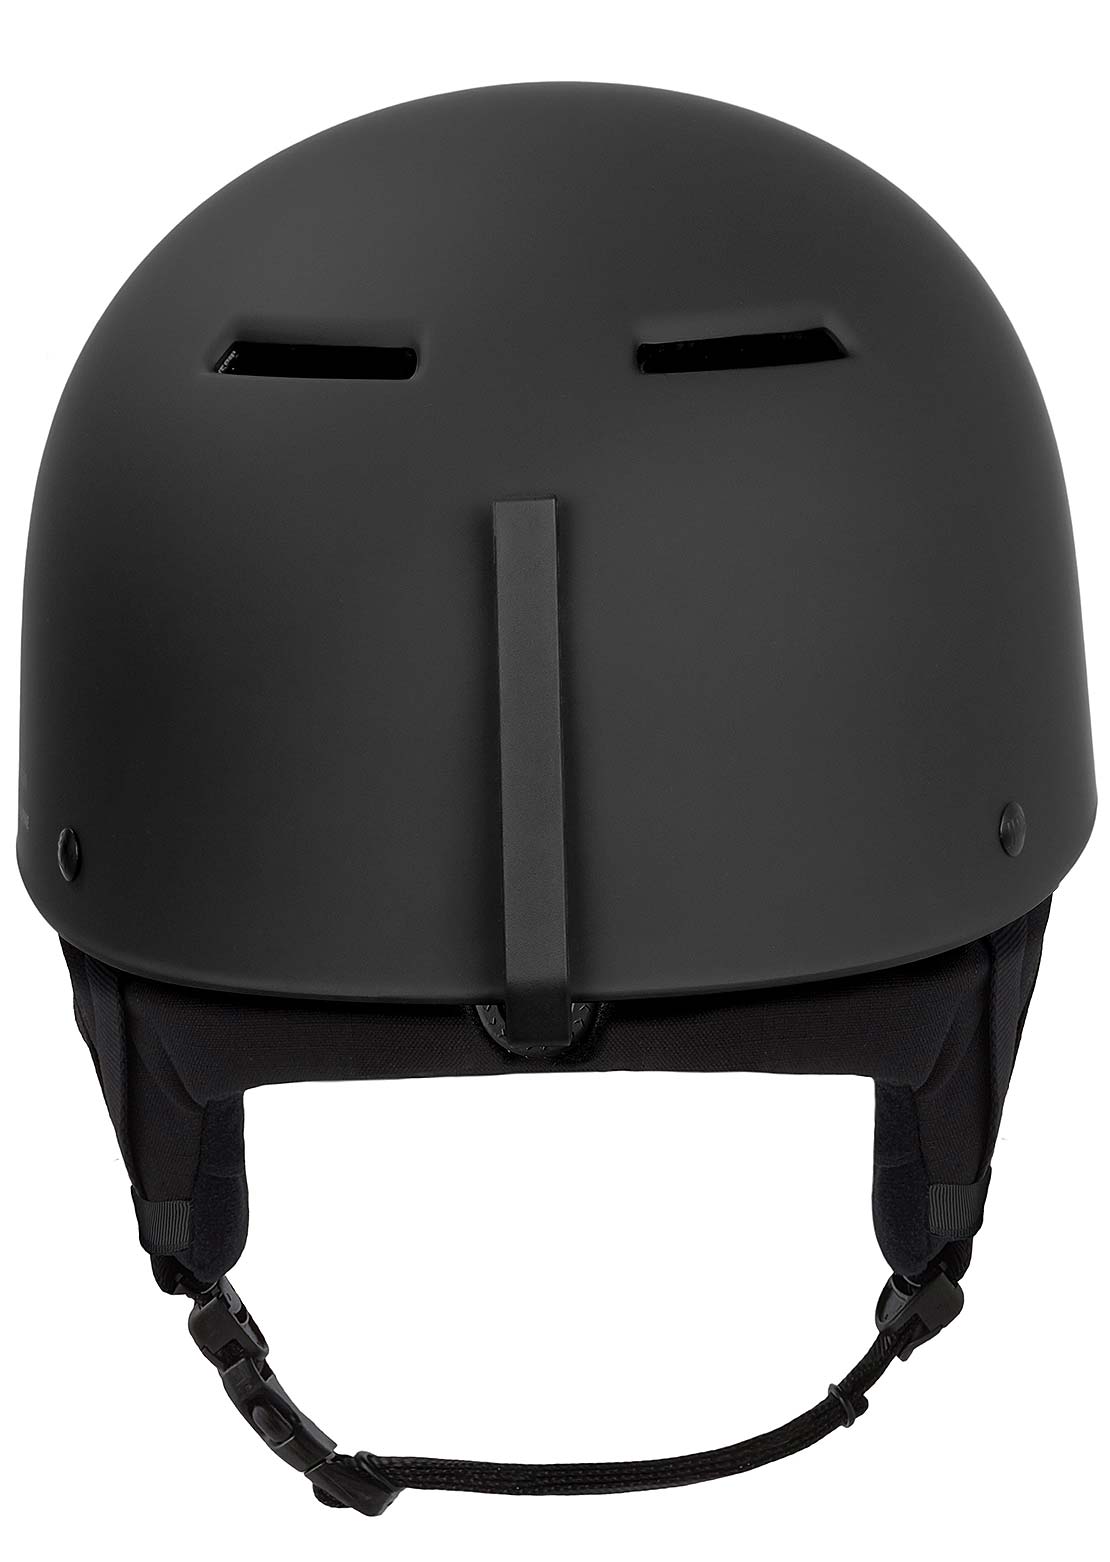 Sandbox Classic 2.0 Snow MIPS Winter Helmet Black